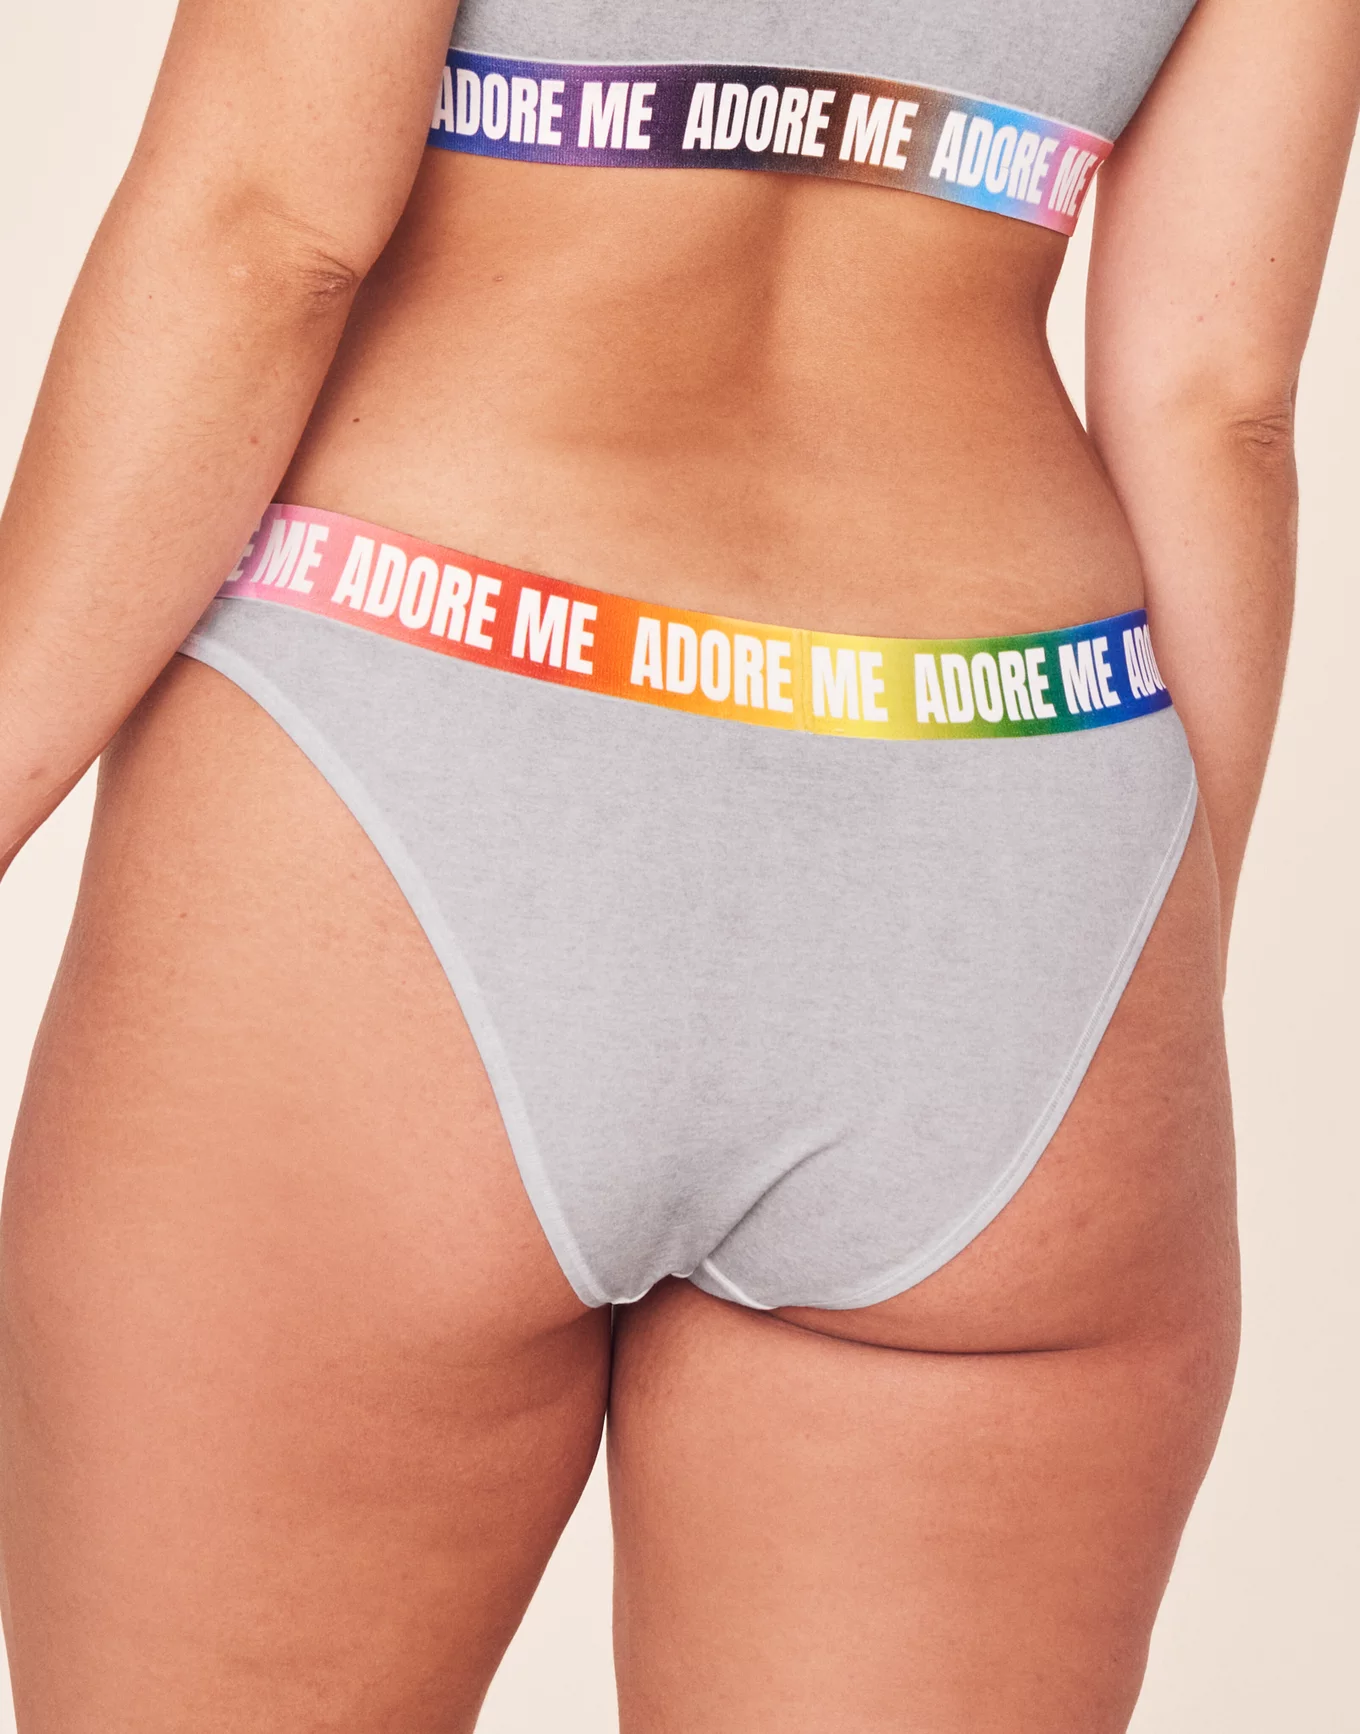 Adore Me Gynger Bikini Women's Panties Plus and Regular Sizes